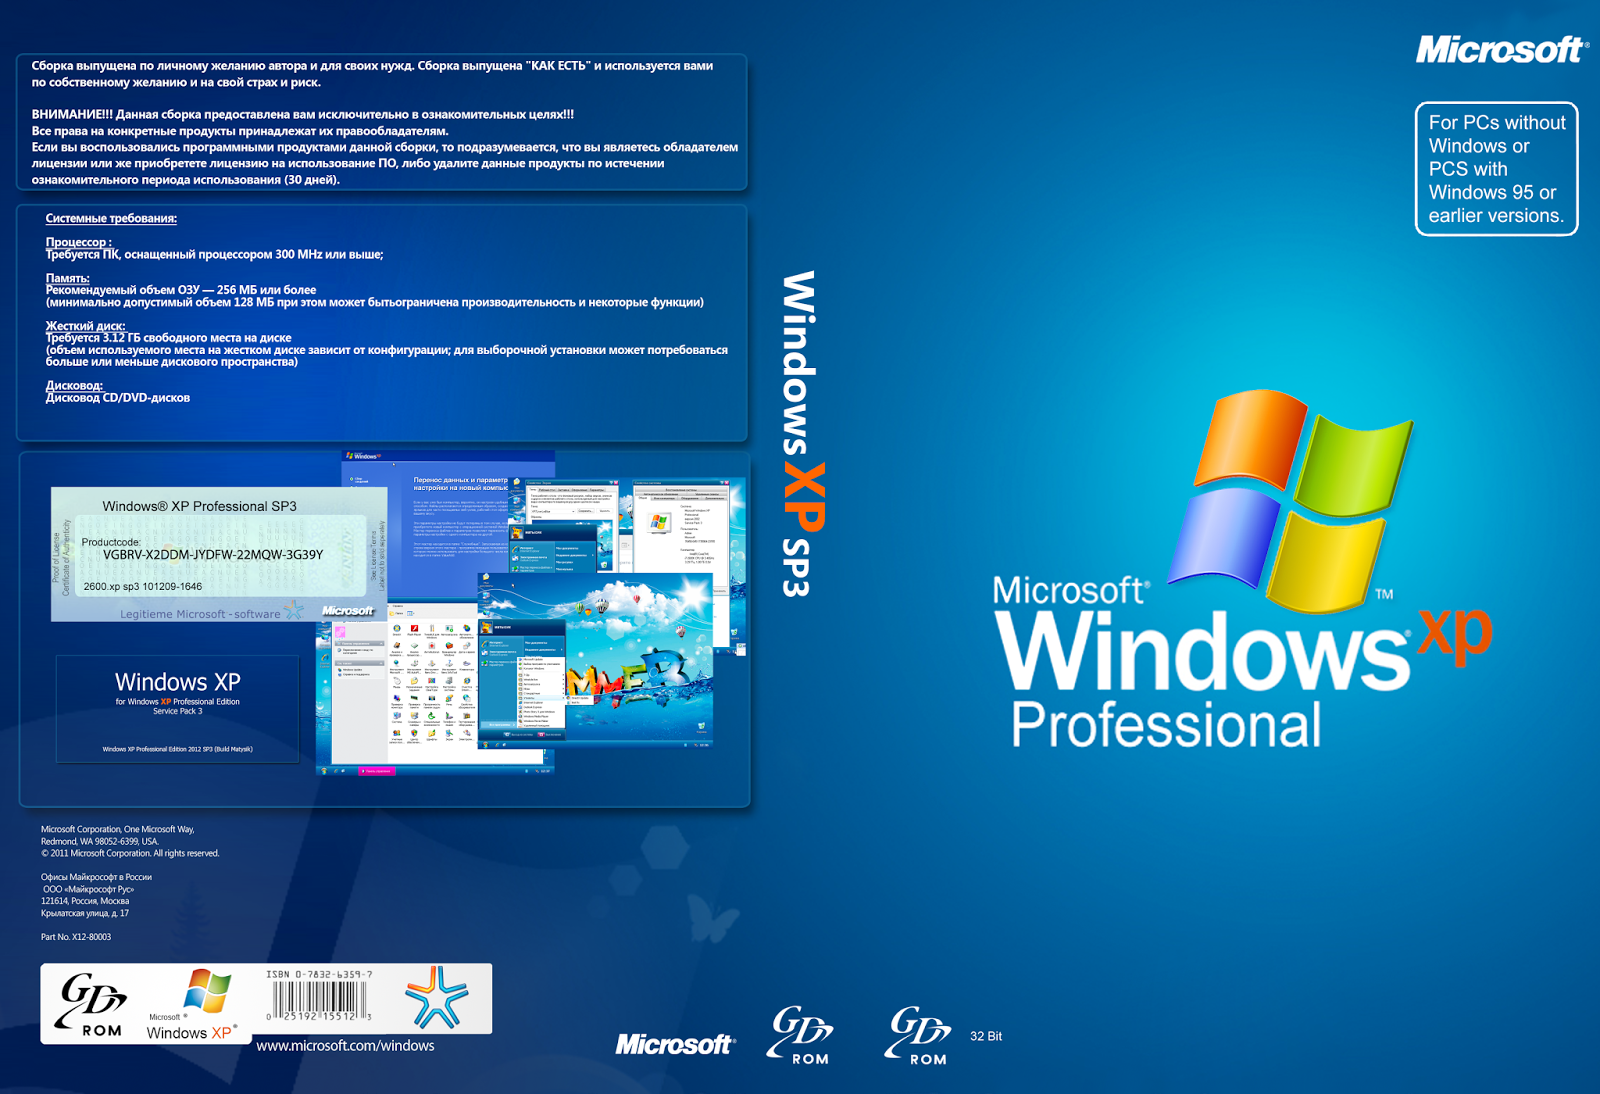 windows xp sp3 professional